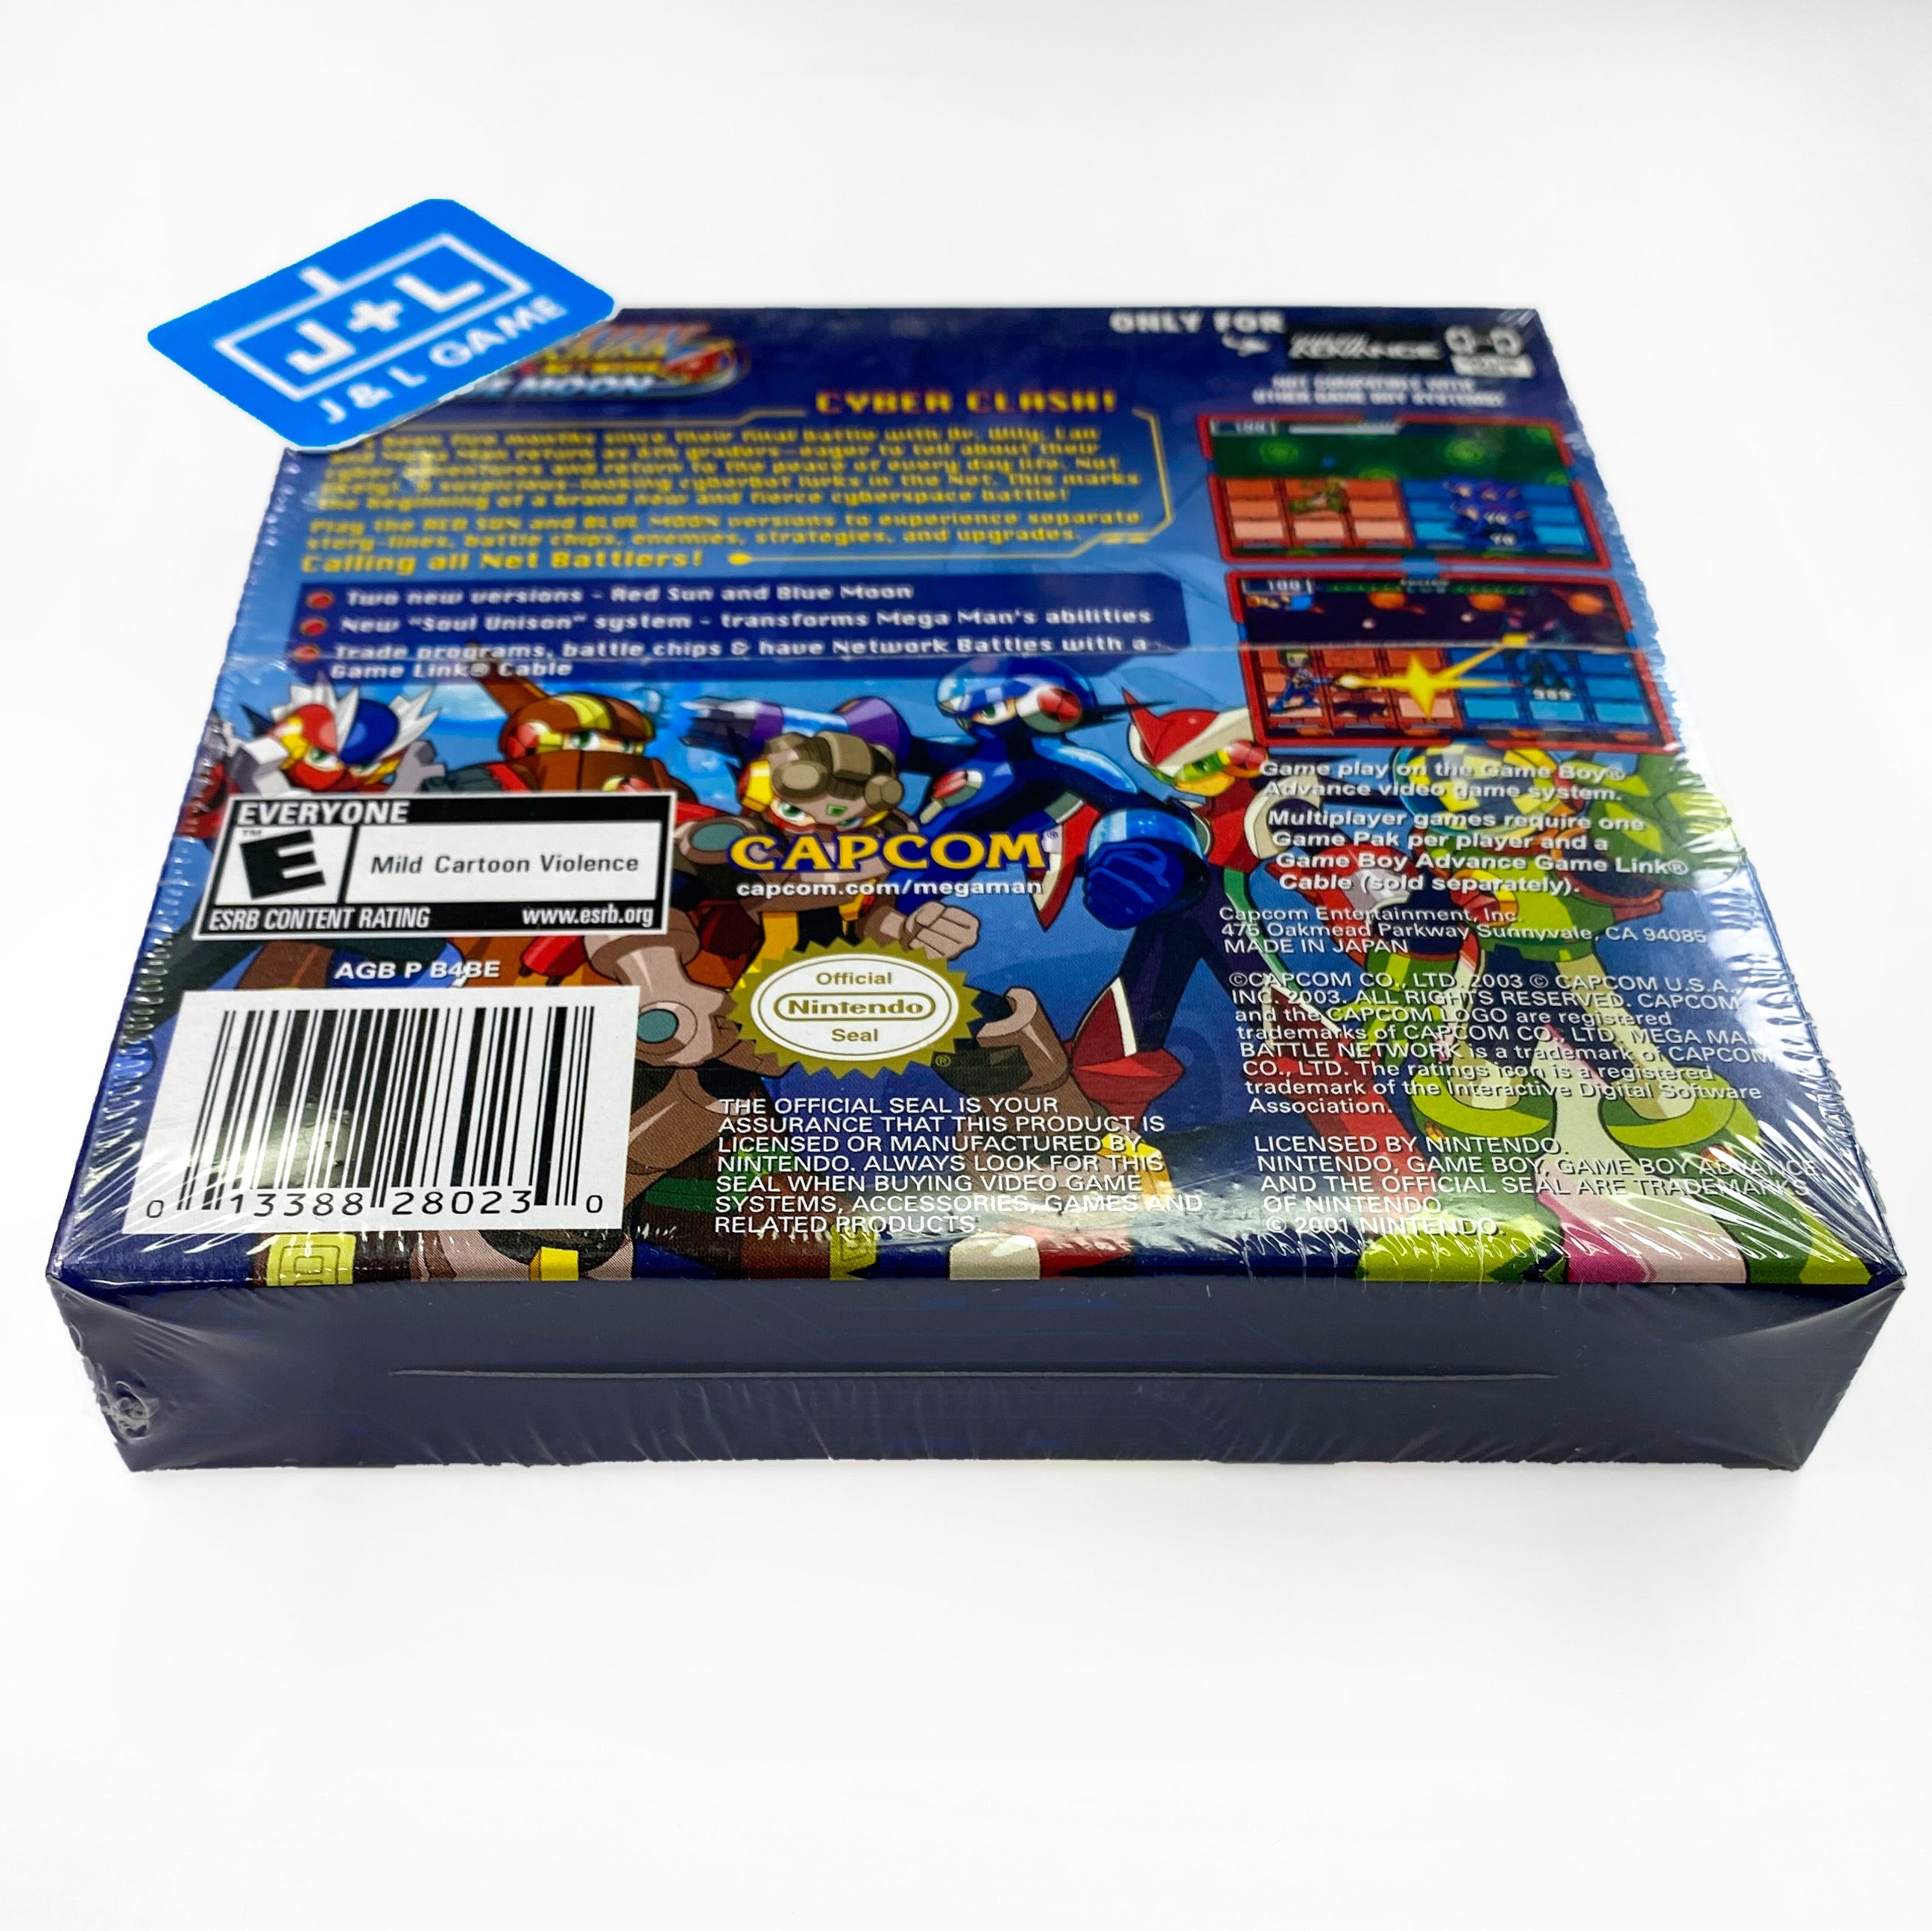 Mega Man Battle Network 4: Blue Moon - (GBA) Game Boy Advance Video Games Capcom   